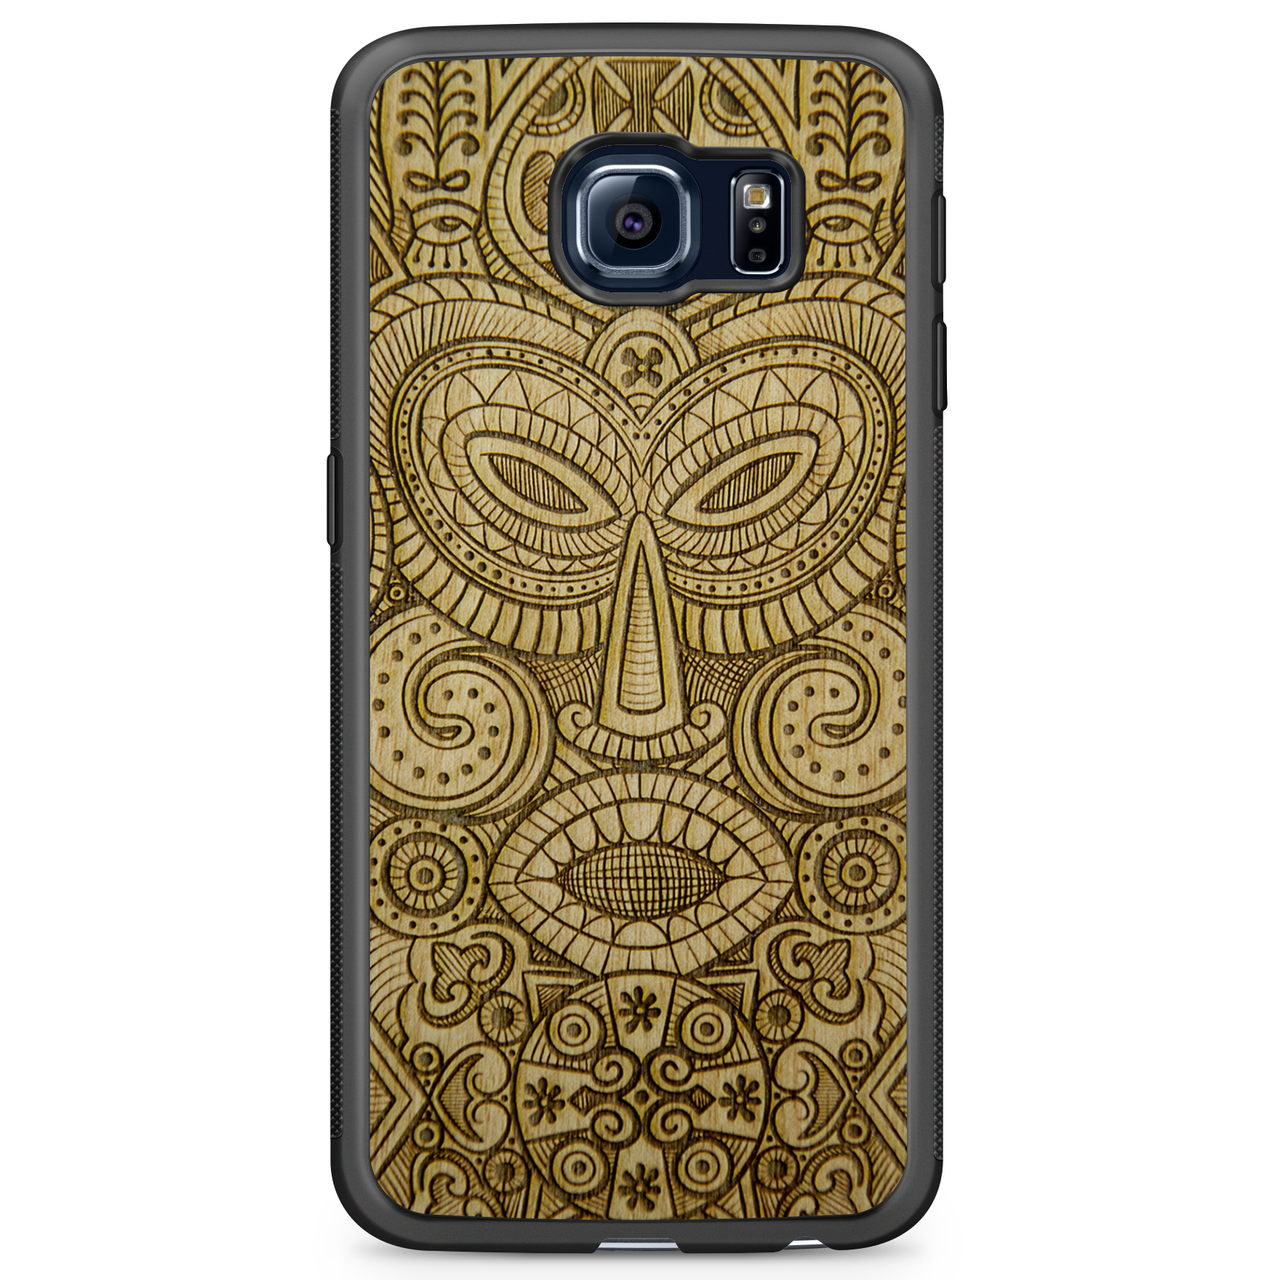 Деревянный чехол для телефона Samsung S6 Edge Tribal Mask